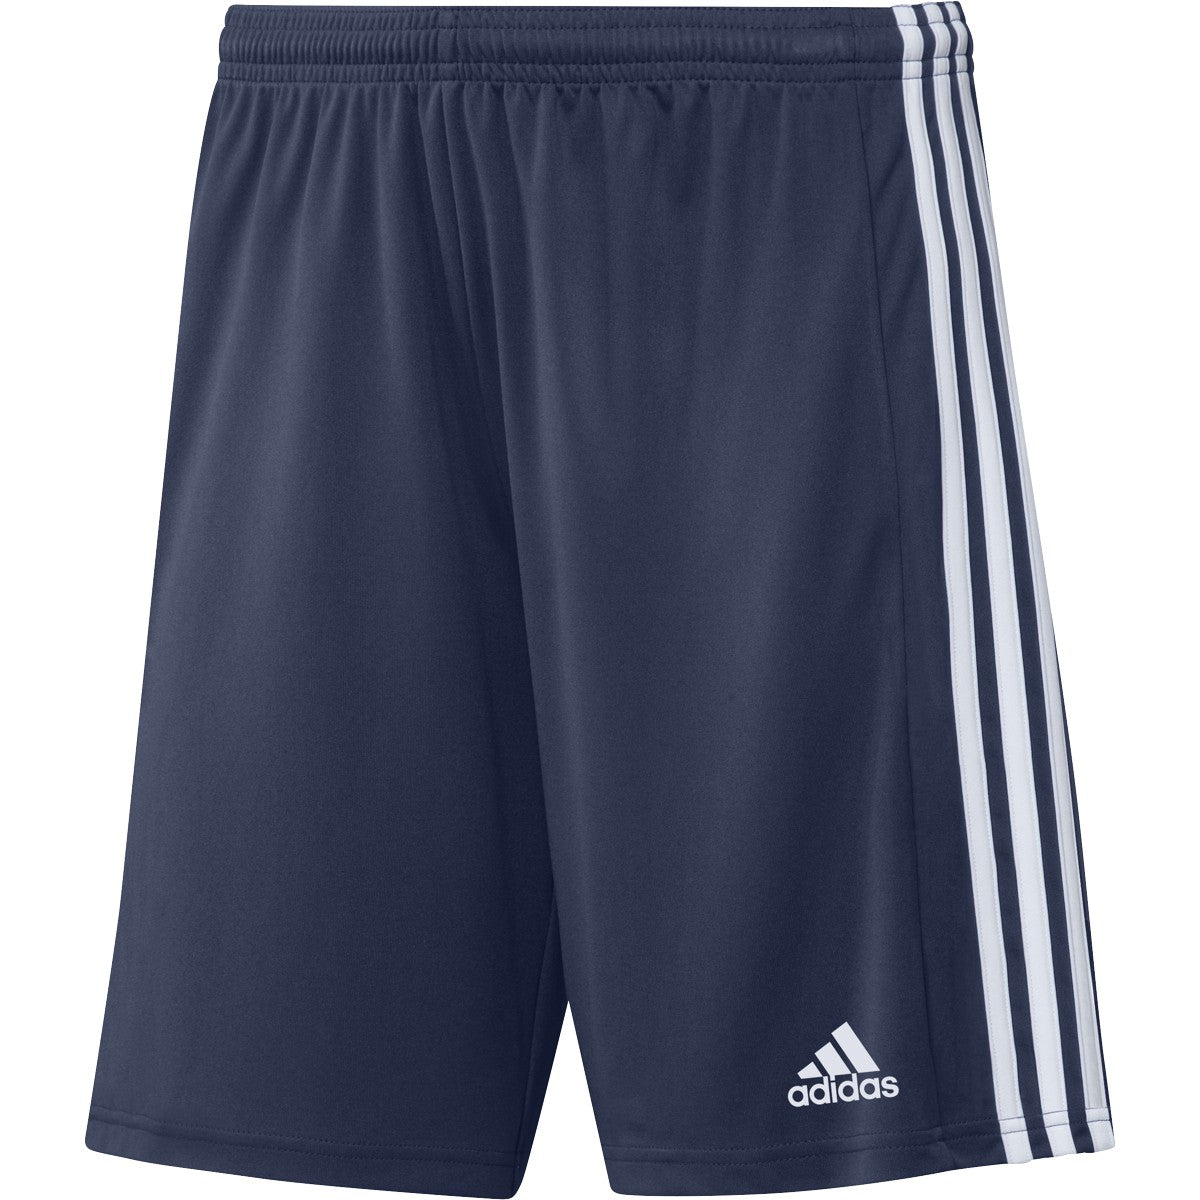 adidas Men's Squadra 21 Short | GN5775 Shorts Adidas Adult Small Team Navy Blue / White 